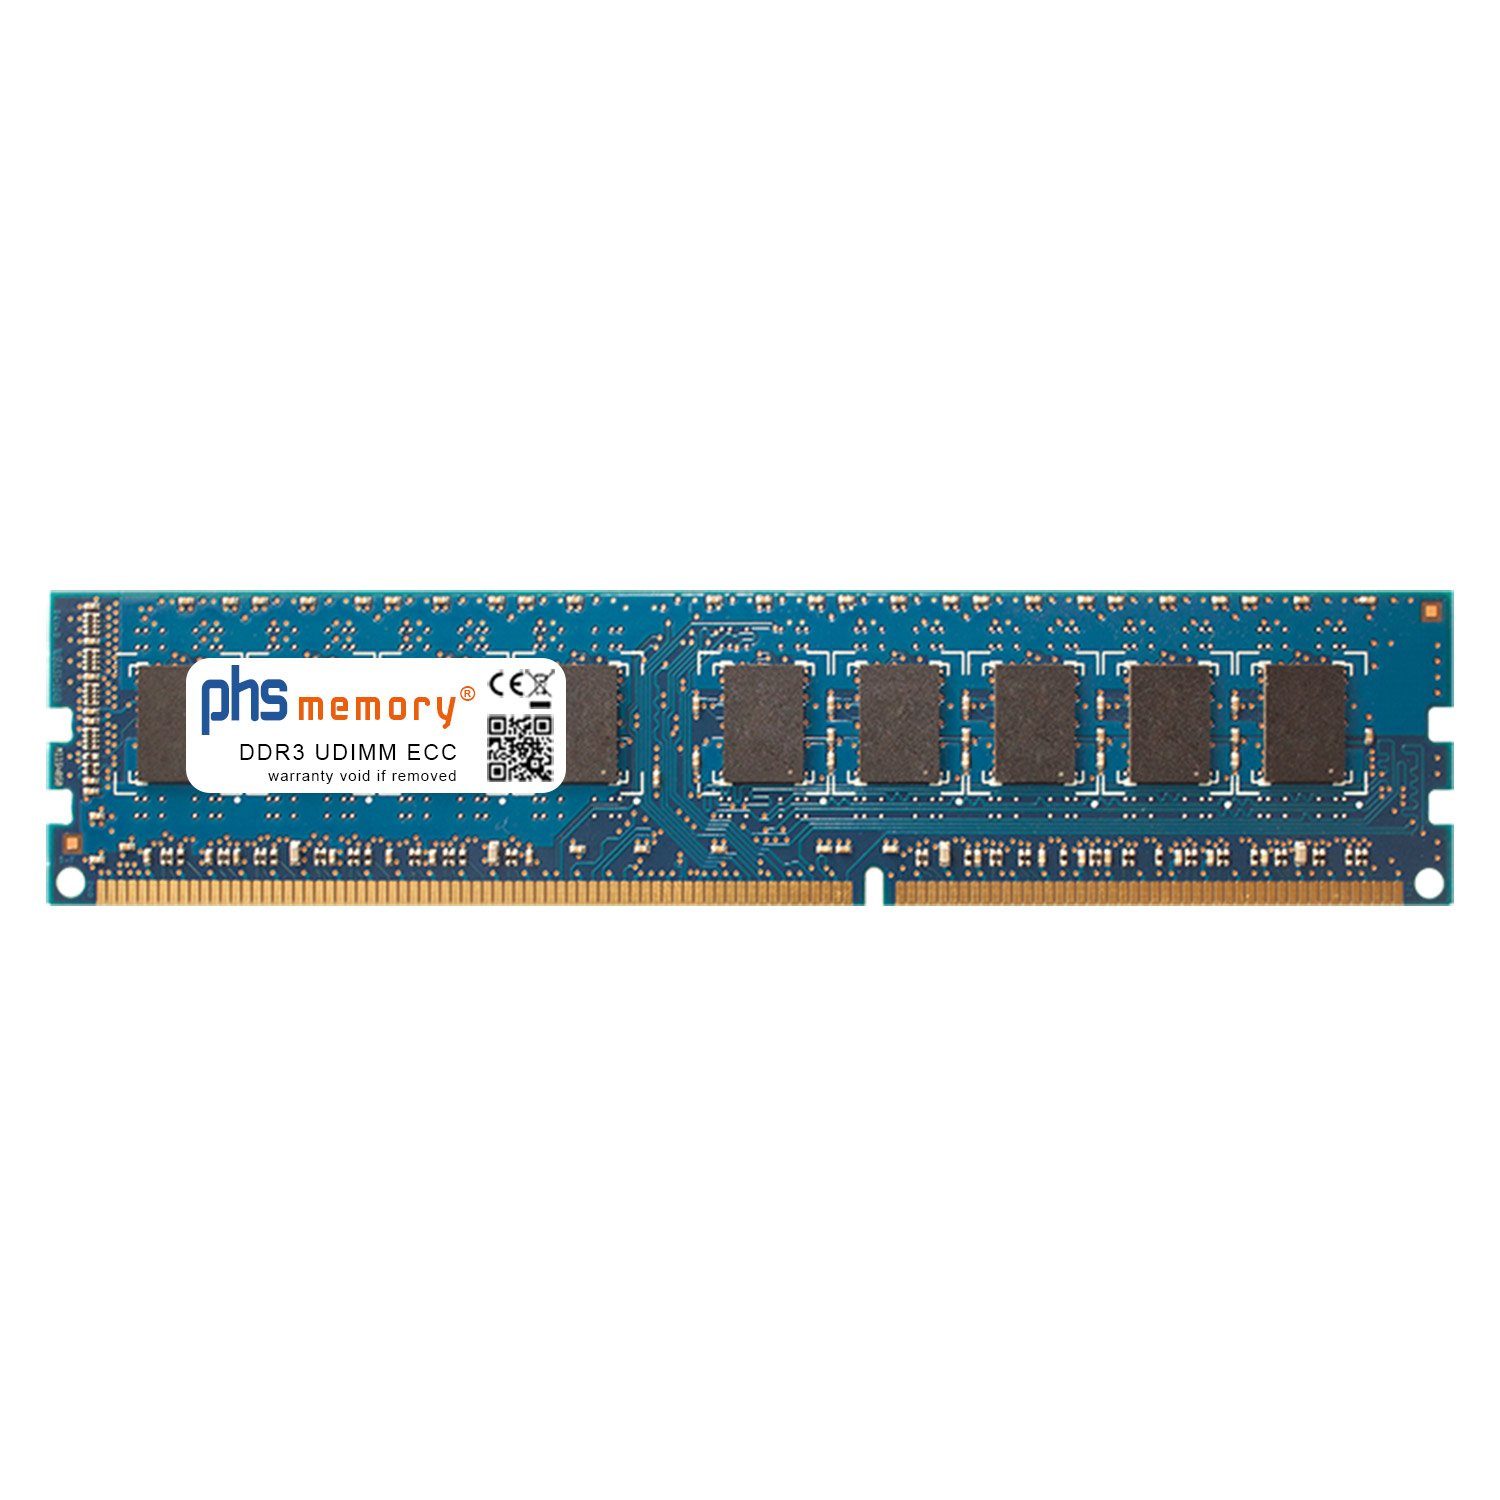 PHS-memory RAM für ASRock Z87 OC Formula/ac Arbeitsspeicher